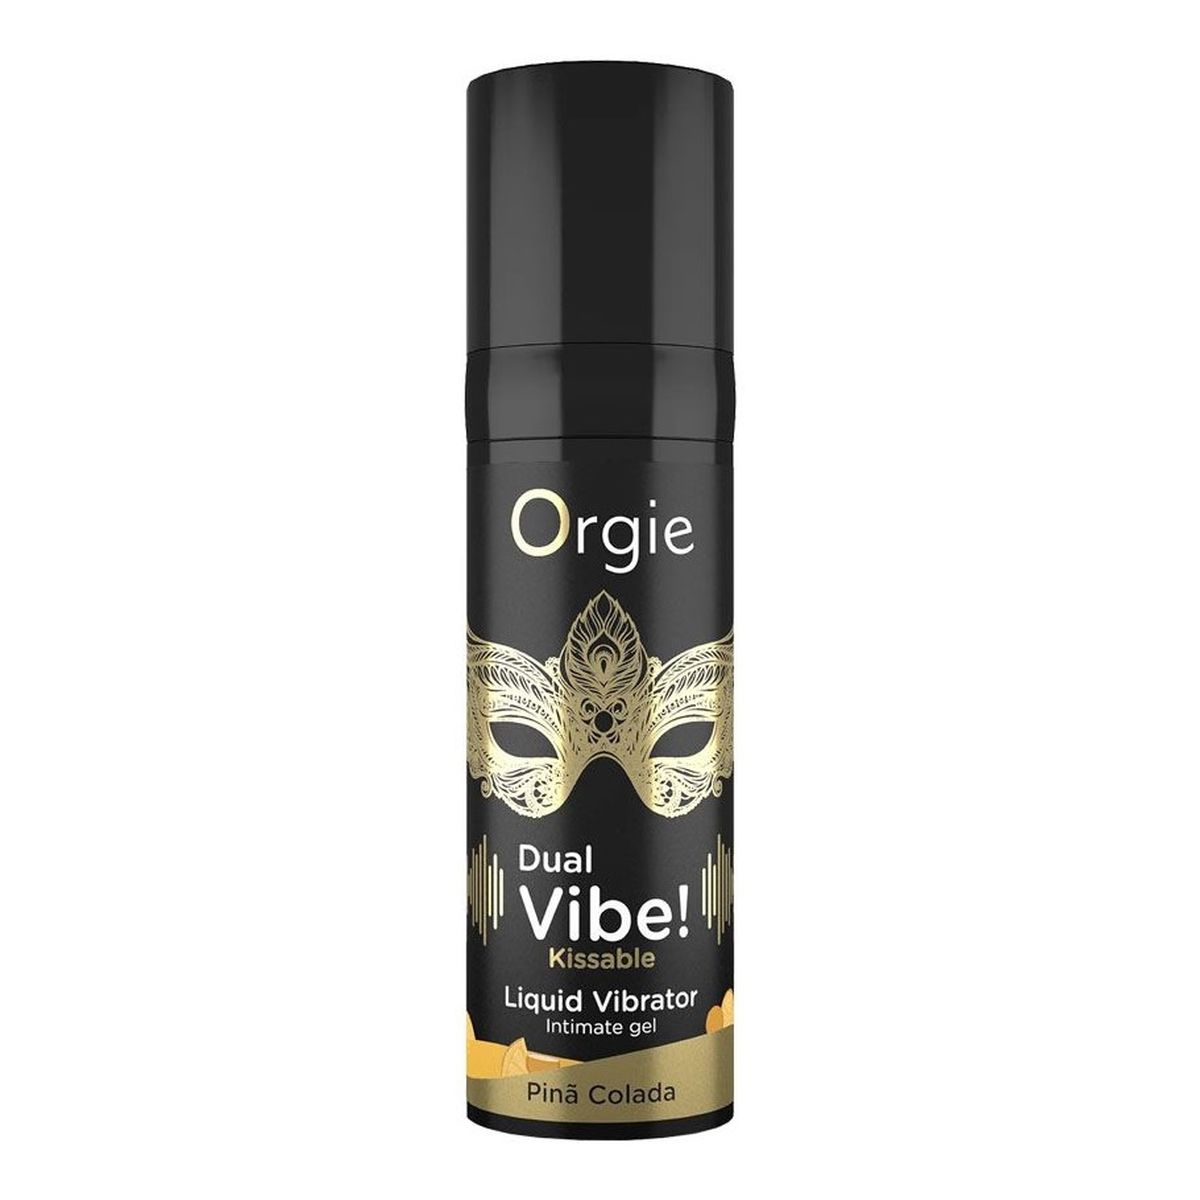 Orgie Dual Vibe! Kissable Liquid Vibrator wibrujący Żel intymny pina colada 15ml